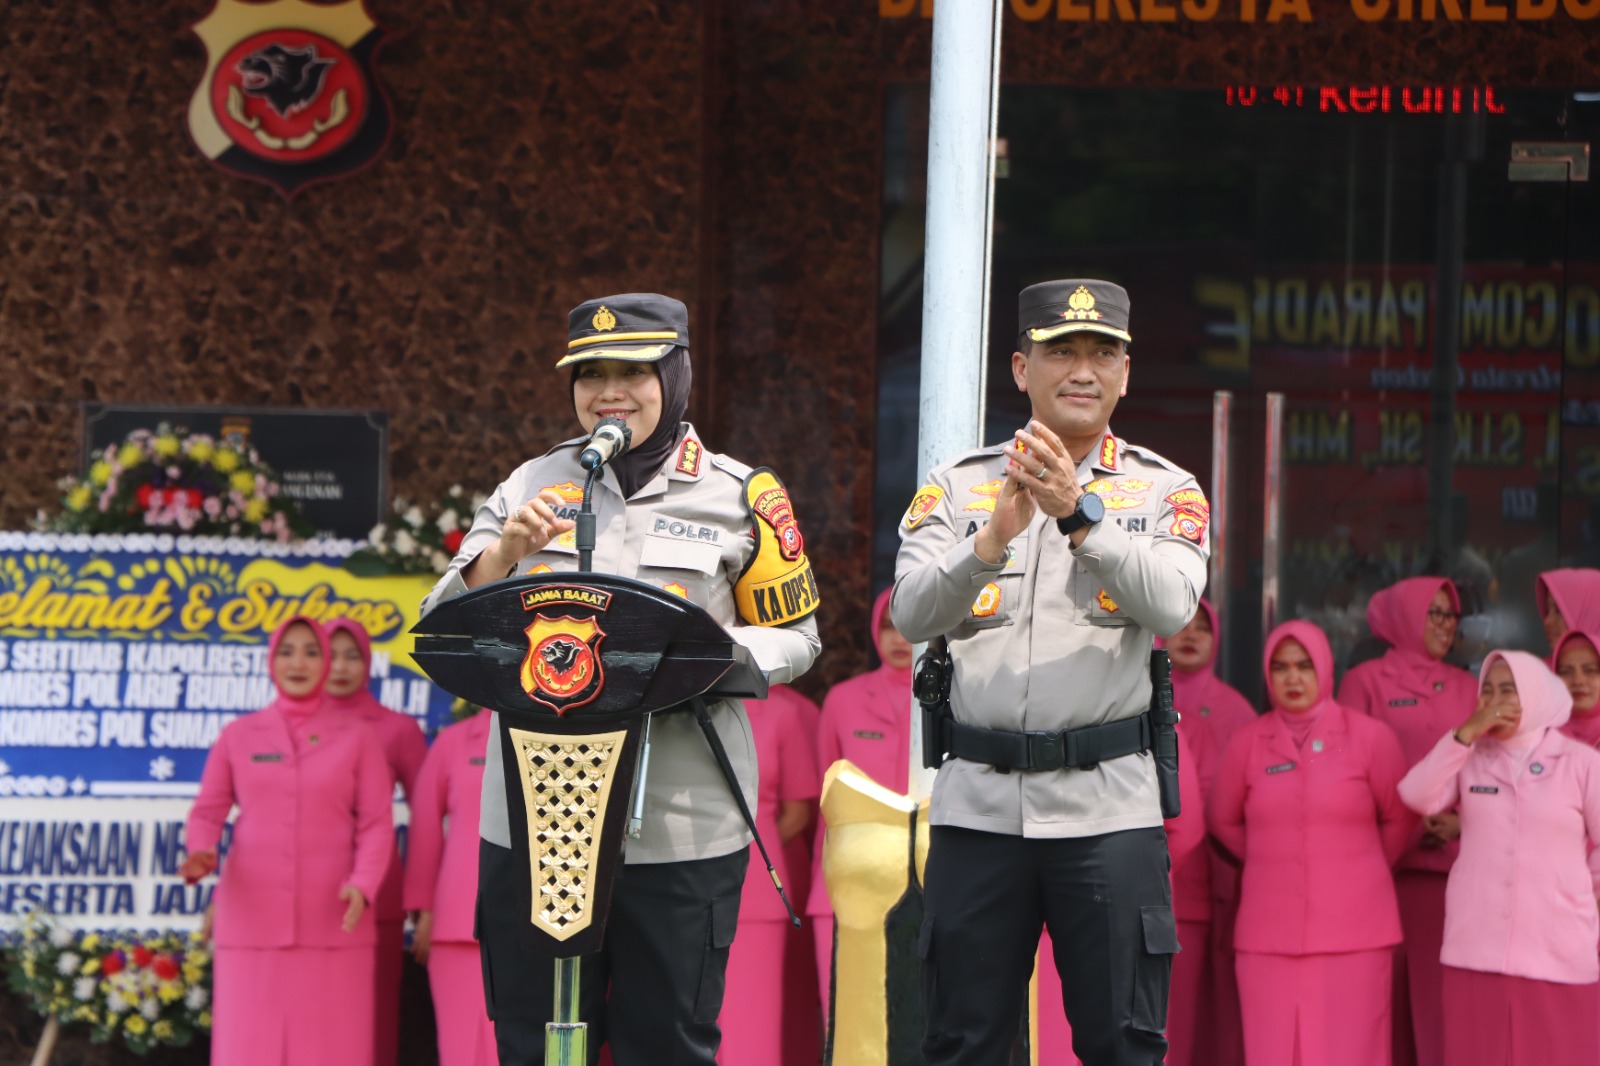 Kapolresta Cirebon Resmi Berganti, Ini Sosok Pengganti Kombes Pol Arif